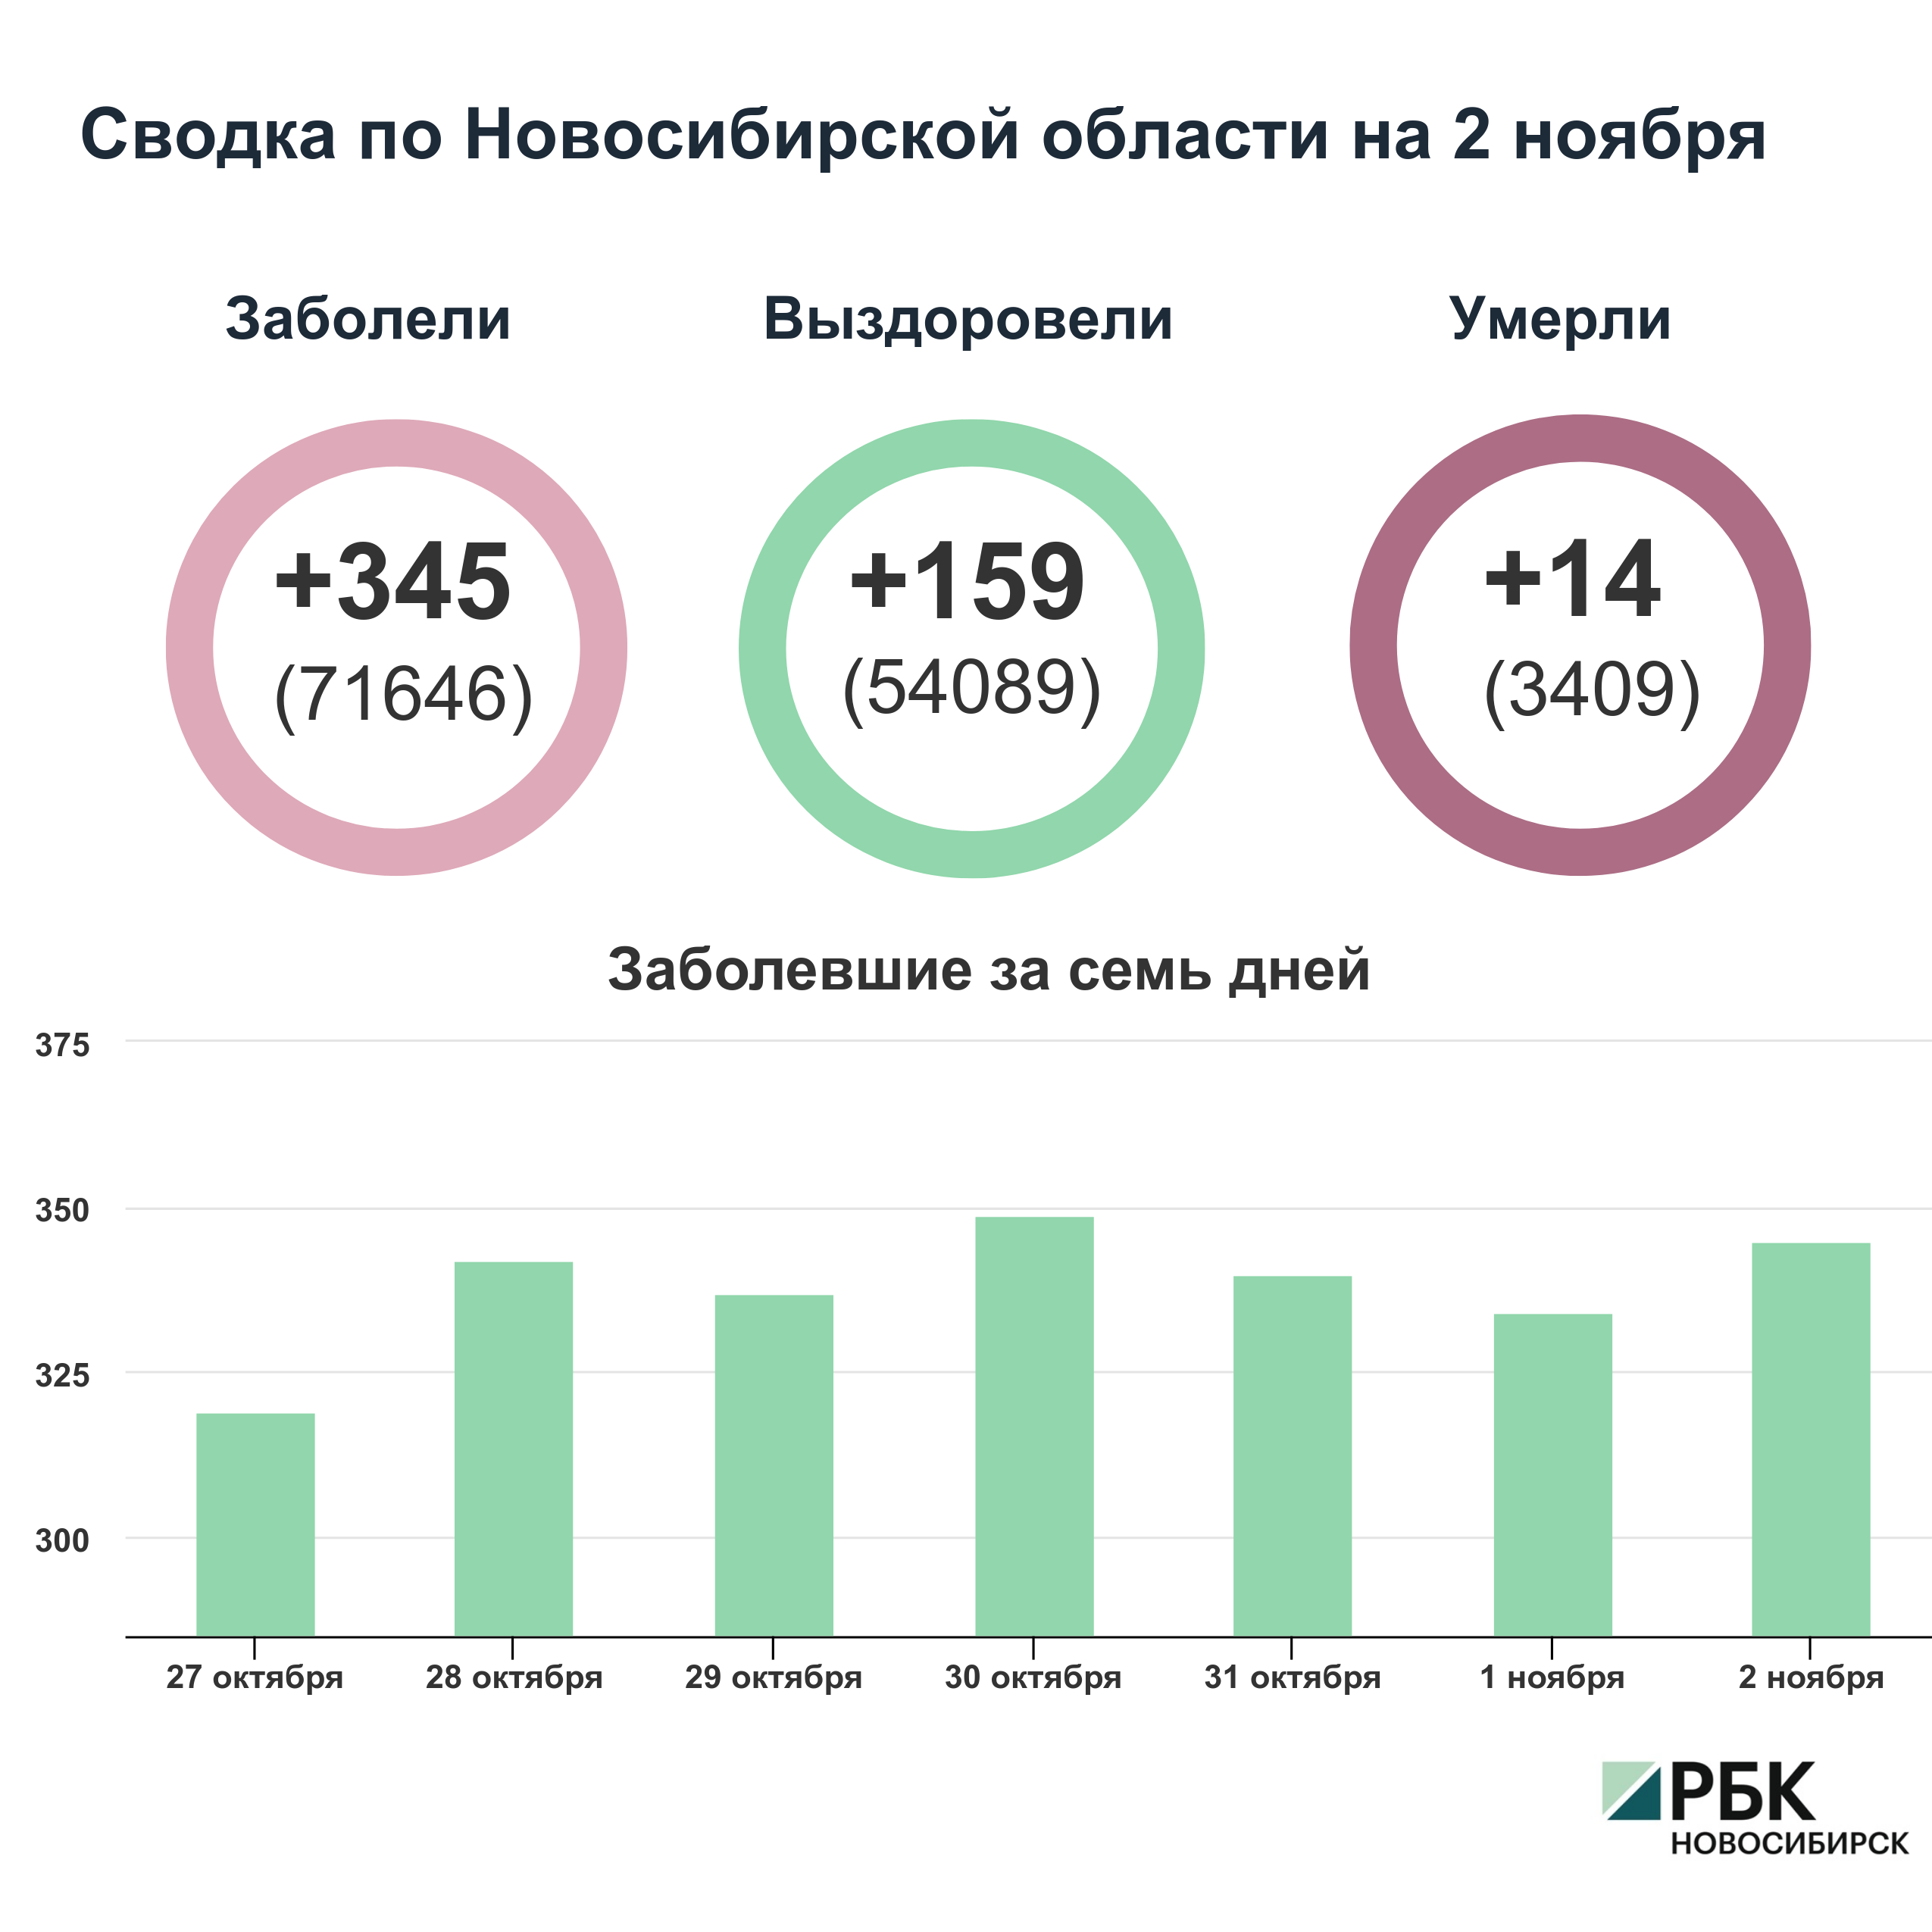 Коронавирус в Новосибирске: сводка на 2 ноября